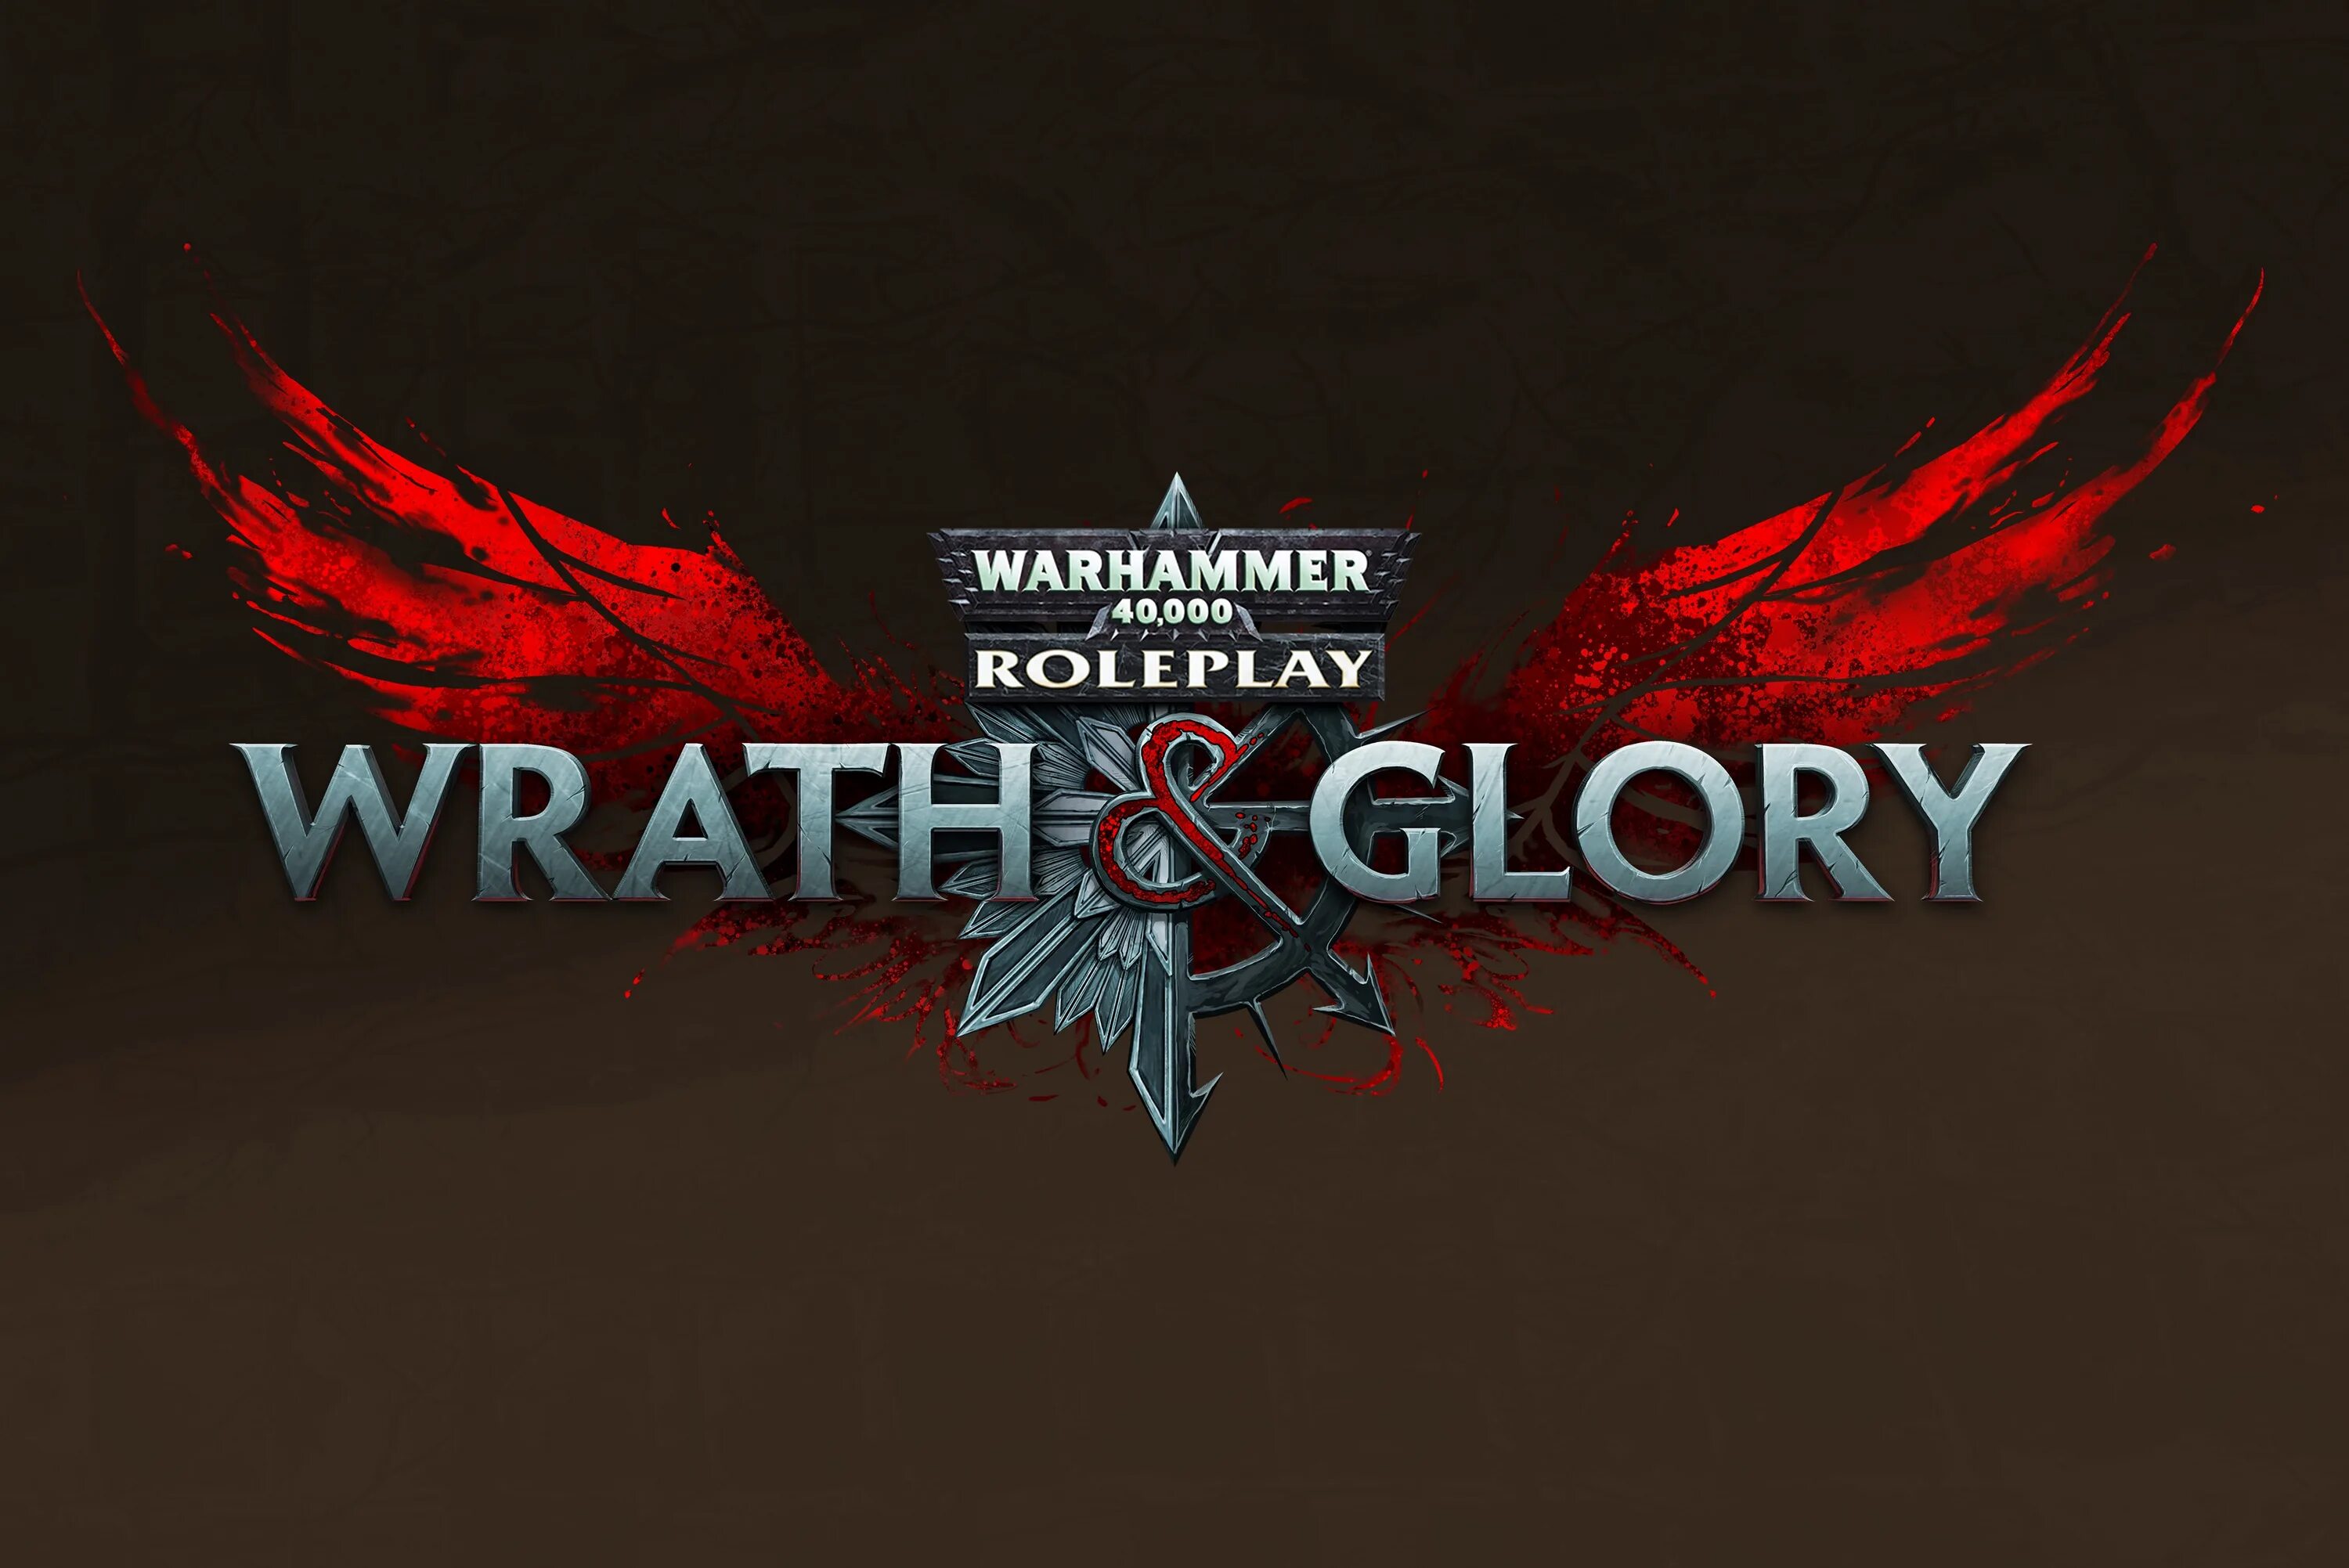 Ardor gaming fury макросы. Wrath and Glory. Warhammer 40k Wrath and Glory. Wrath & Glory (гнев и Слава). Warhammer 40,000 Roleplay карты.